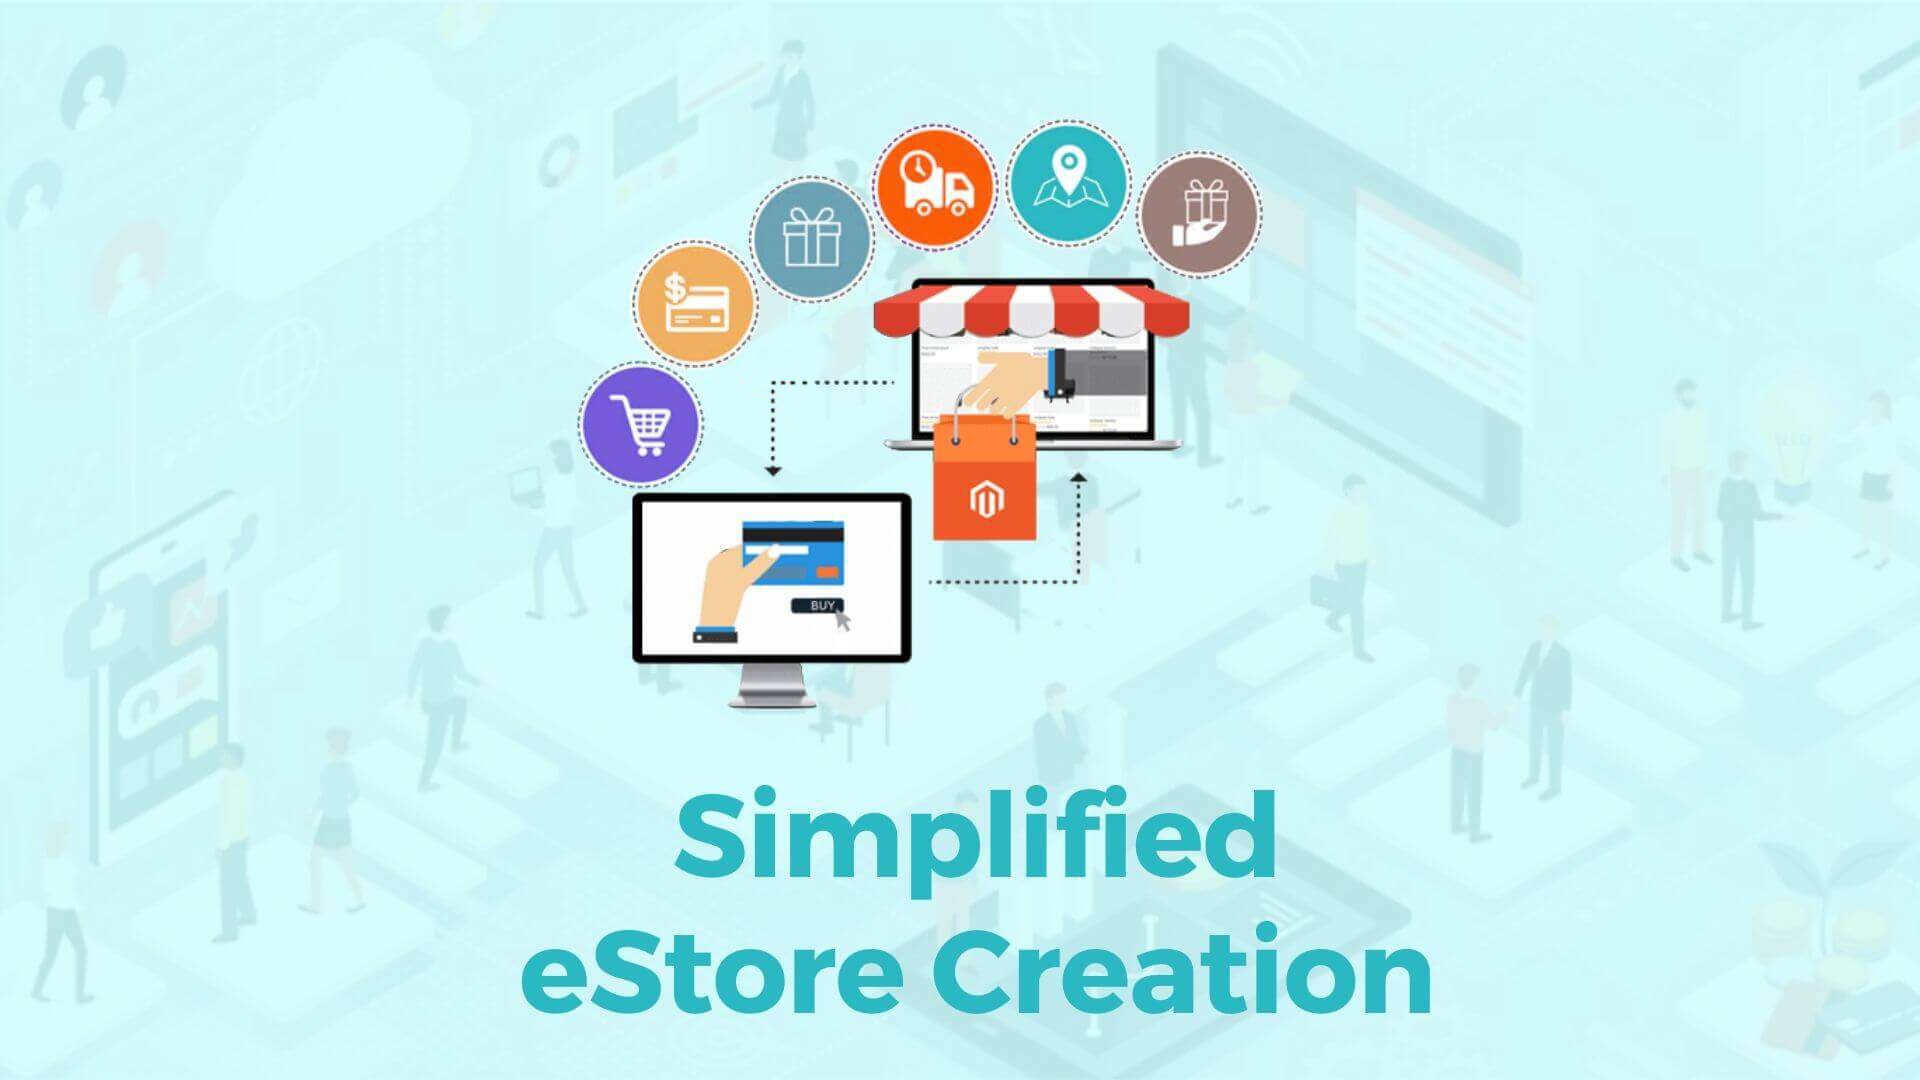 Shopify Makes eStore Creation Simple